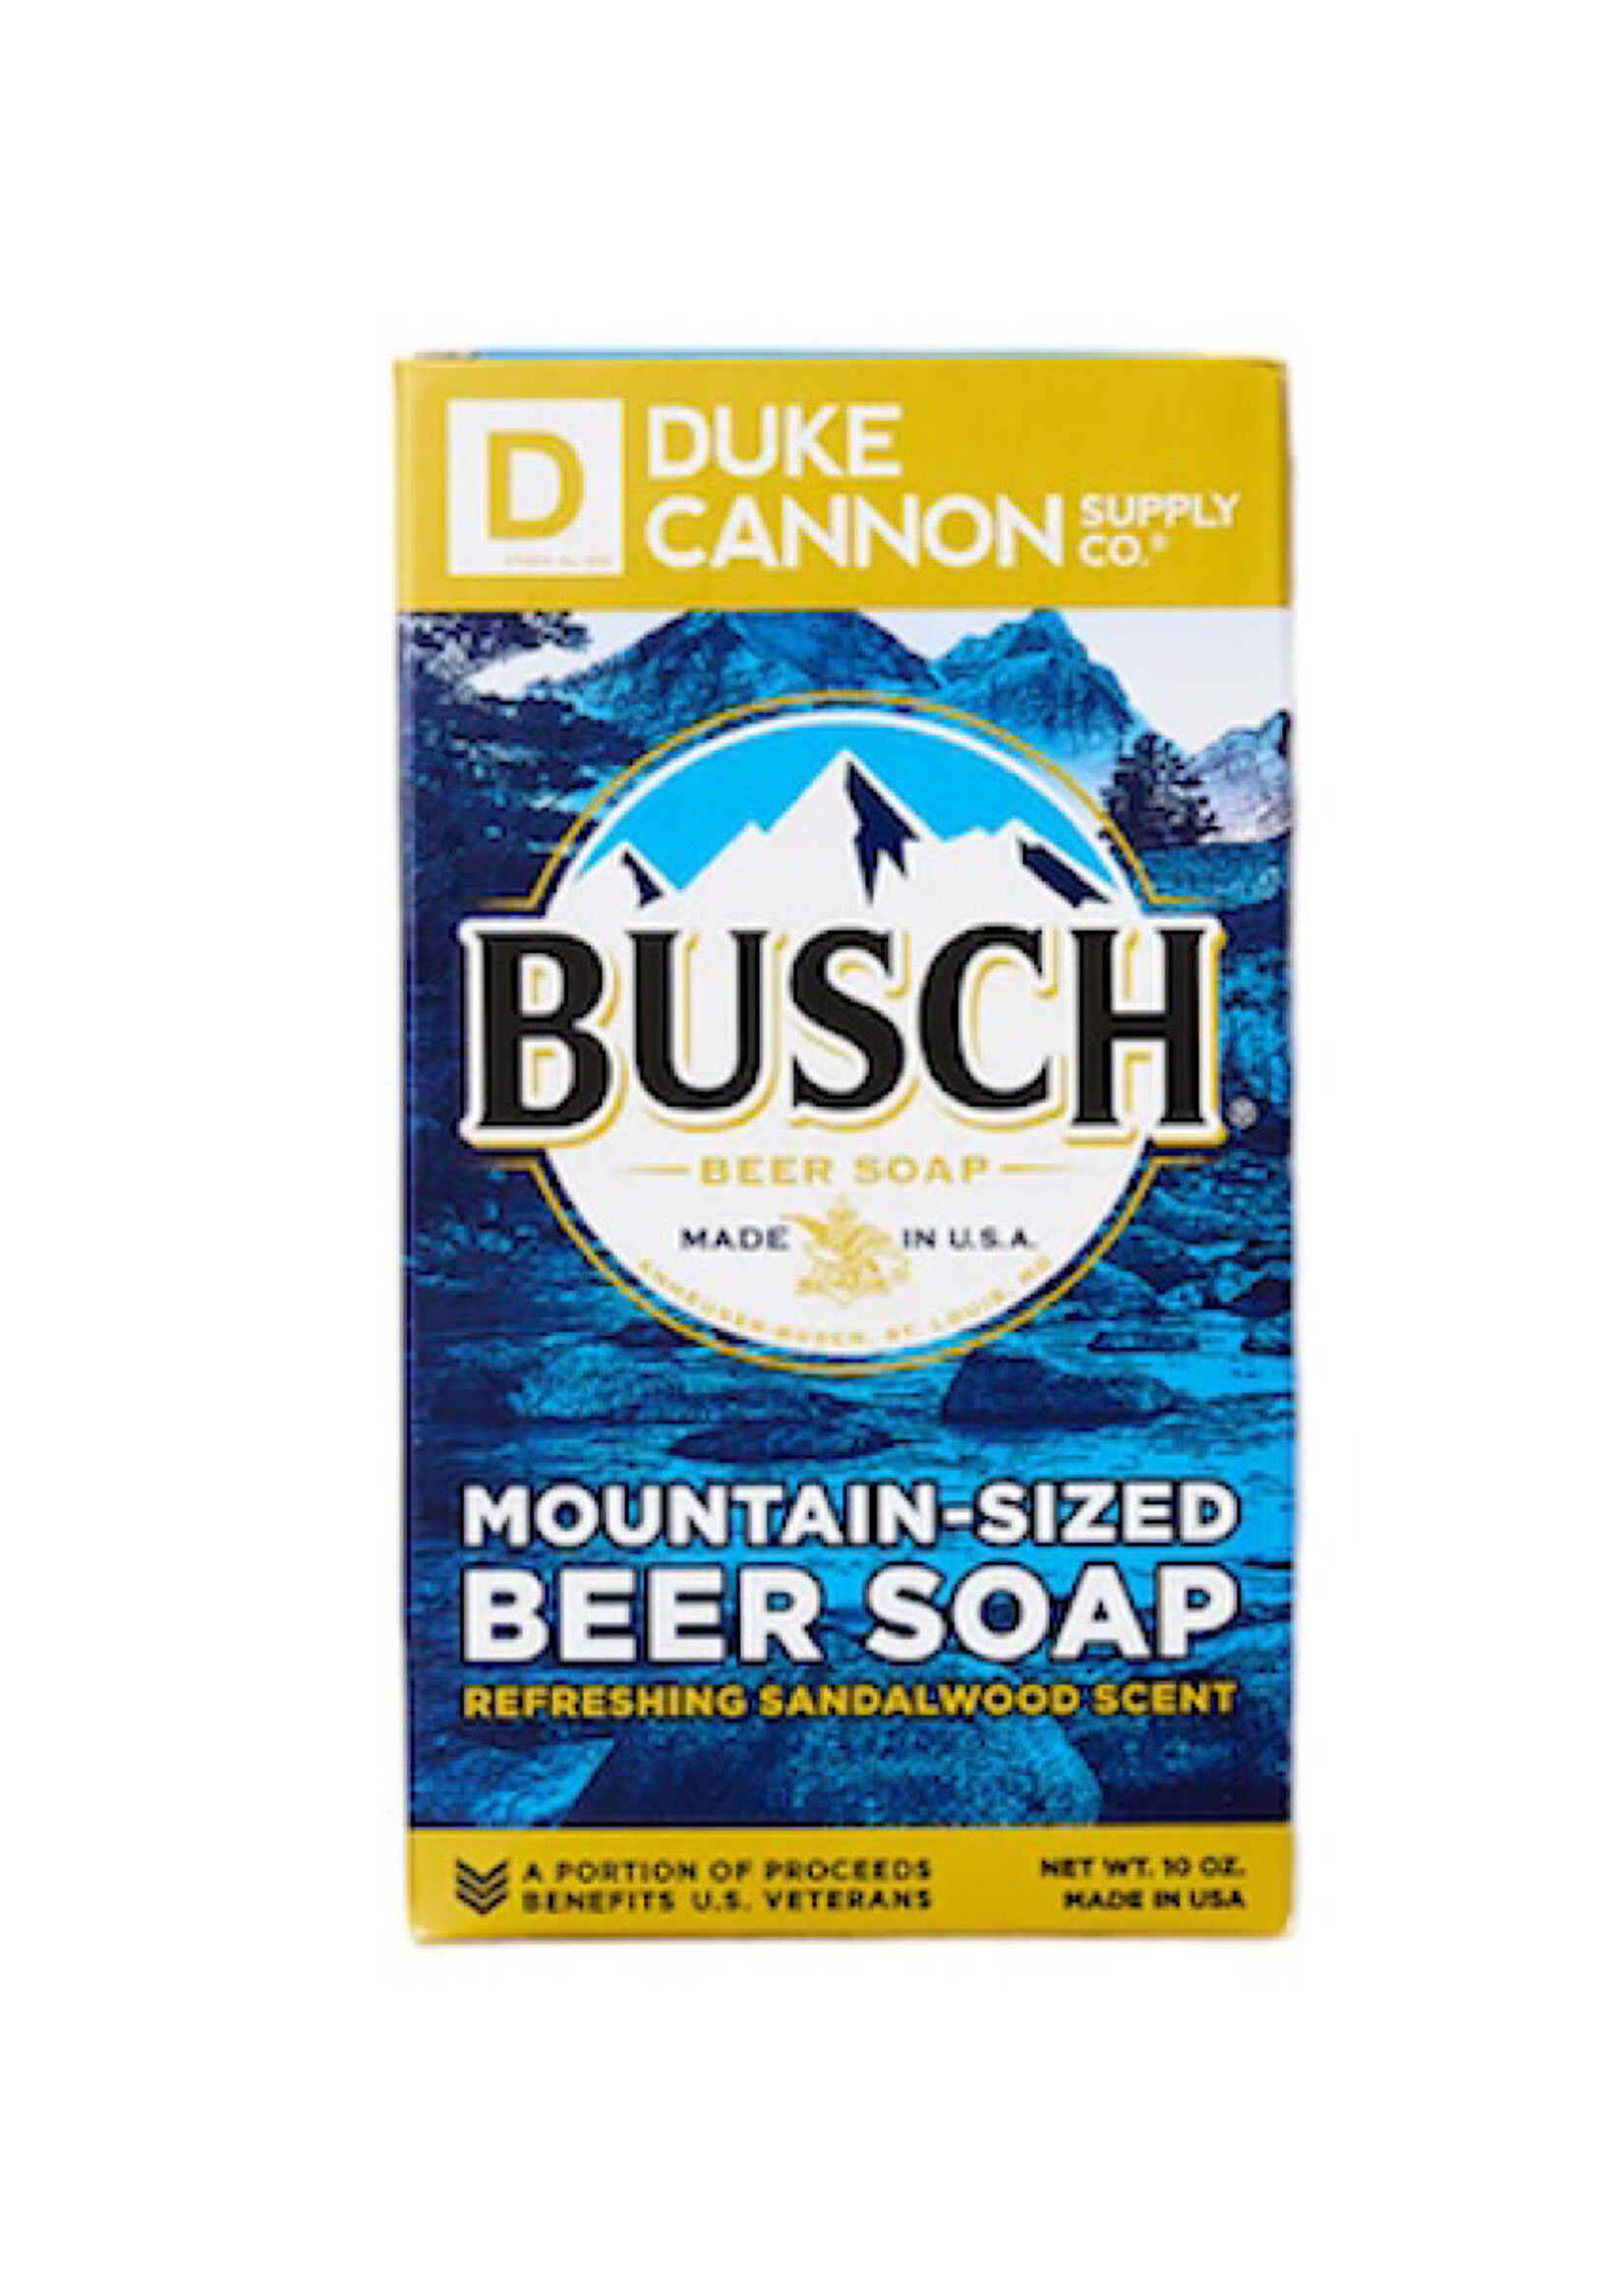 Duke Cannon DC Busch Beer Soap